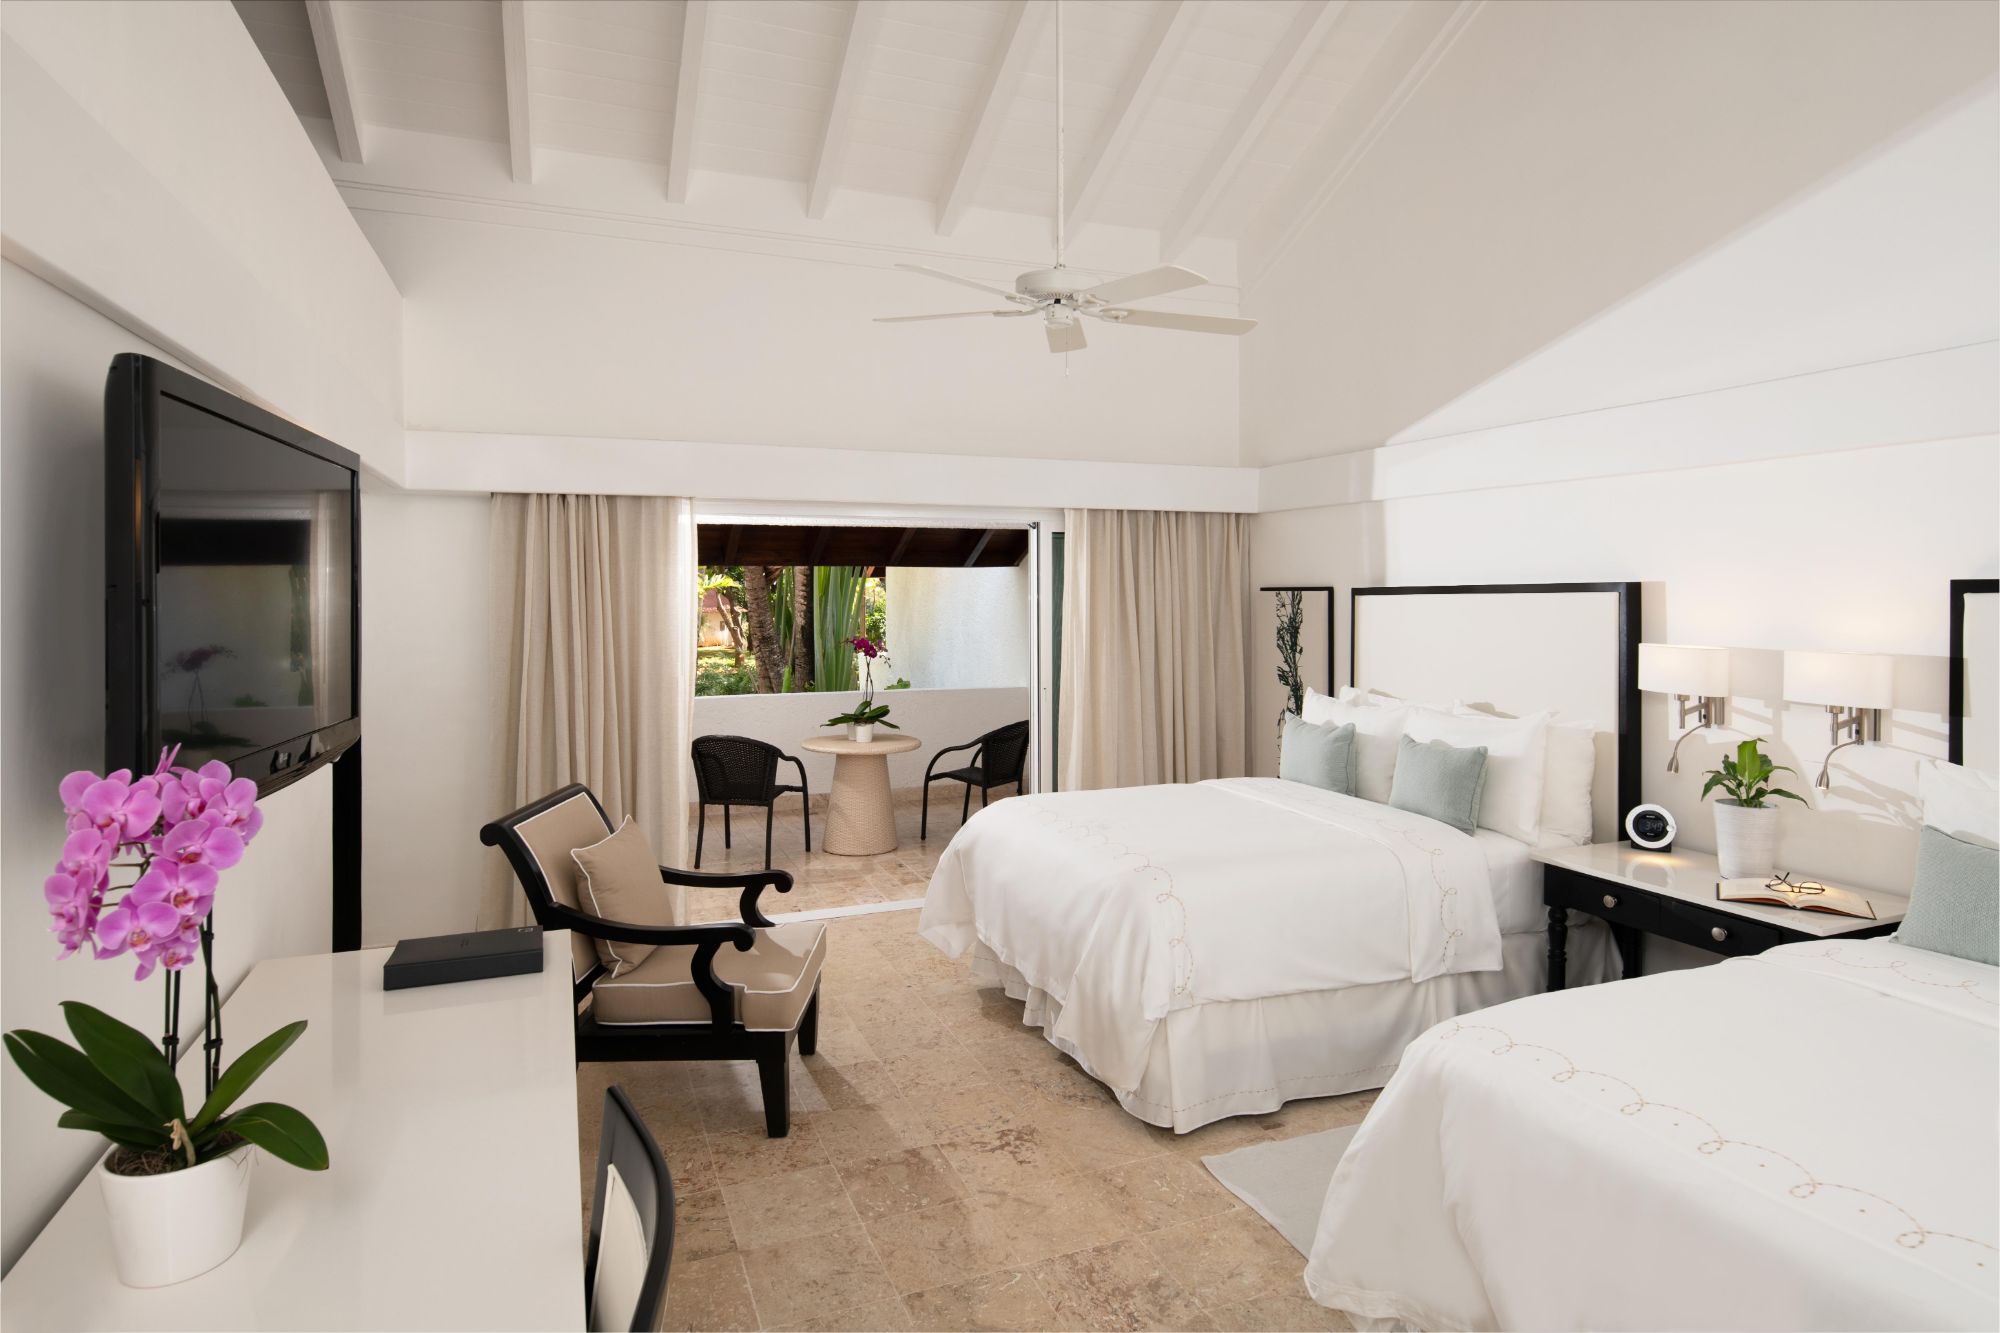 Superior Casita Resort Hotel Room With Double Beds and Patio at Casa de Campo Resort & Villas in the Dominican Republic.